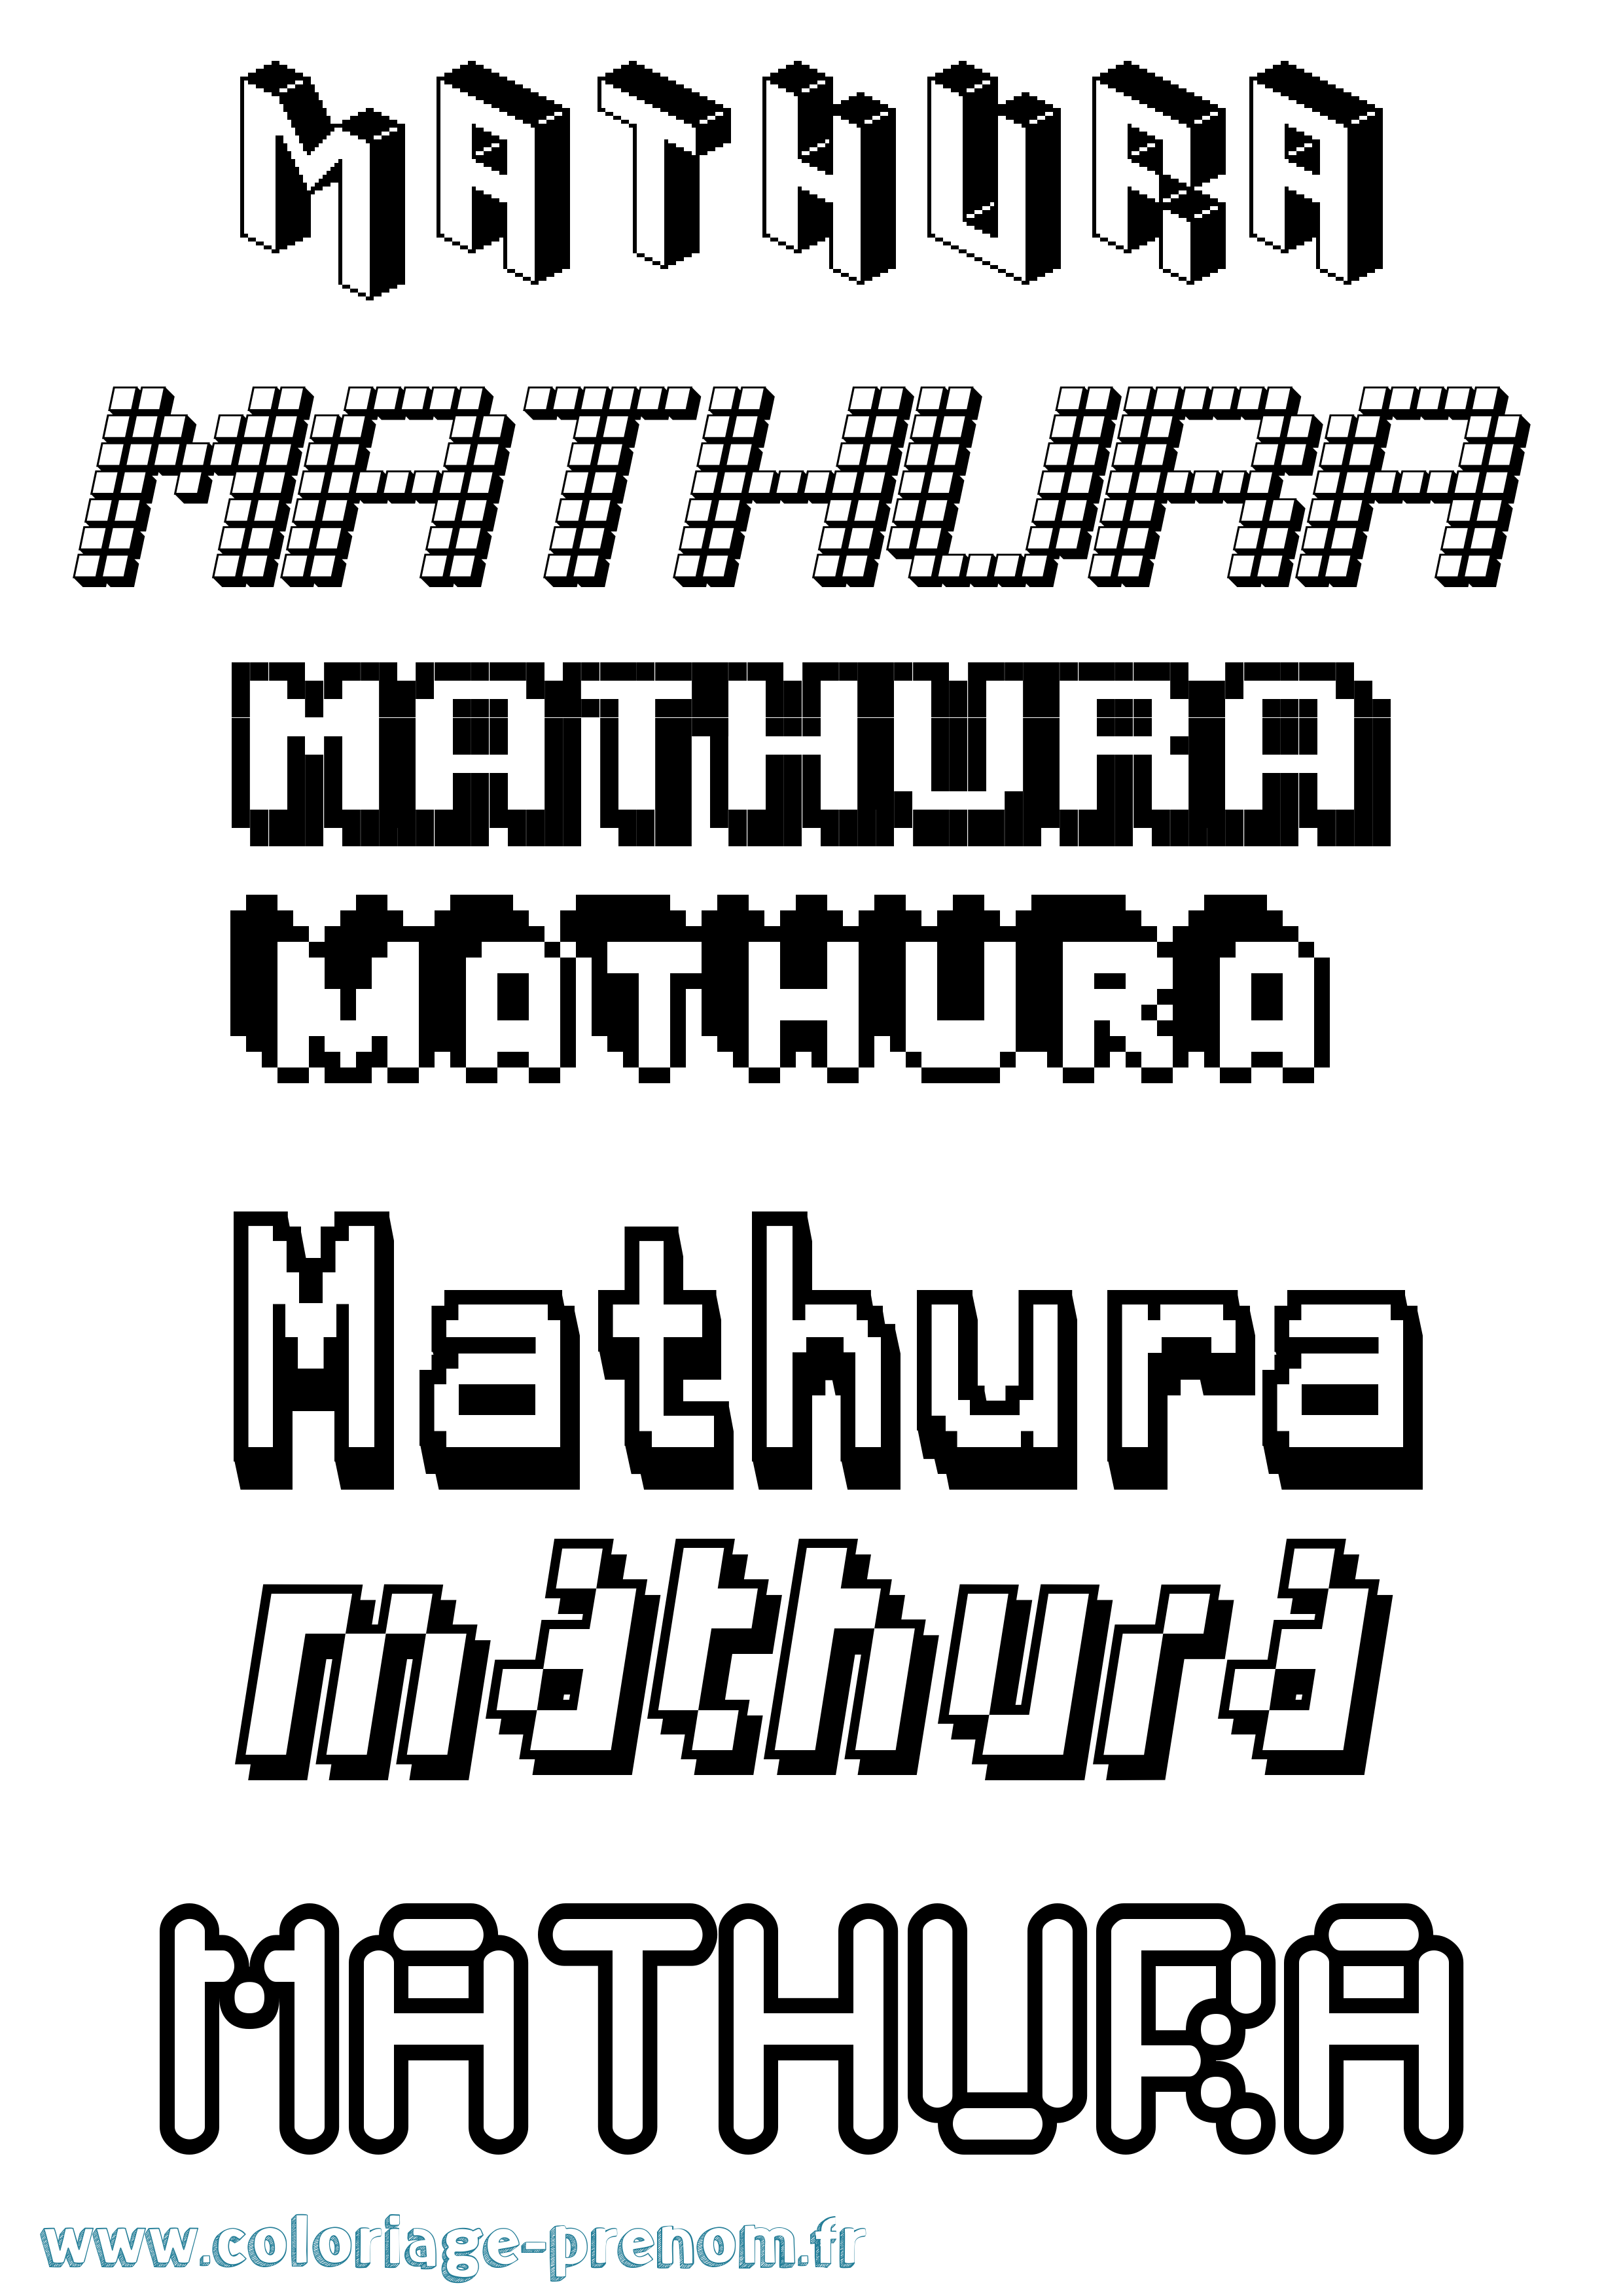 Coloriage prénom Mathura Pixel